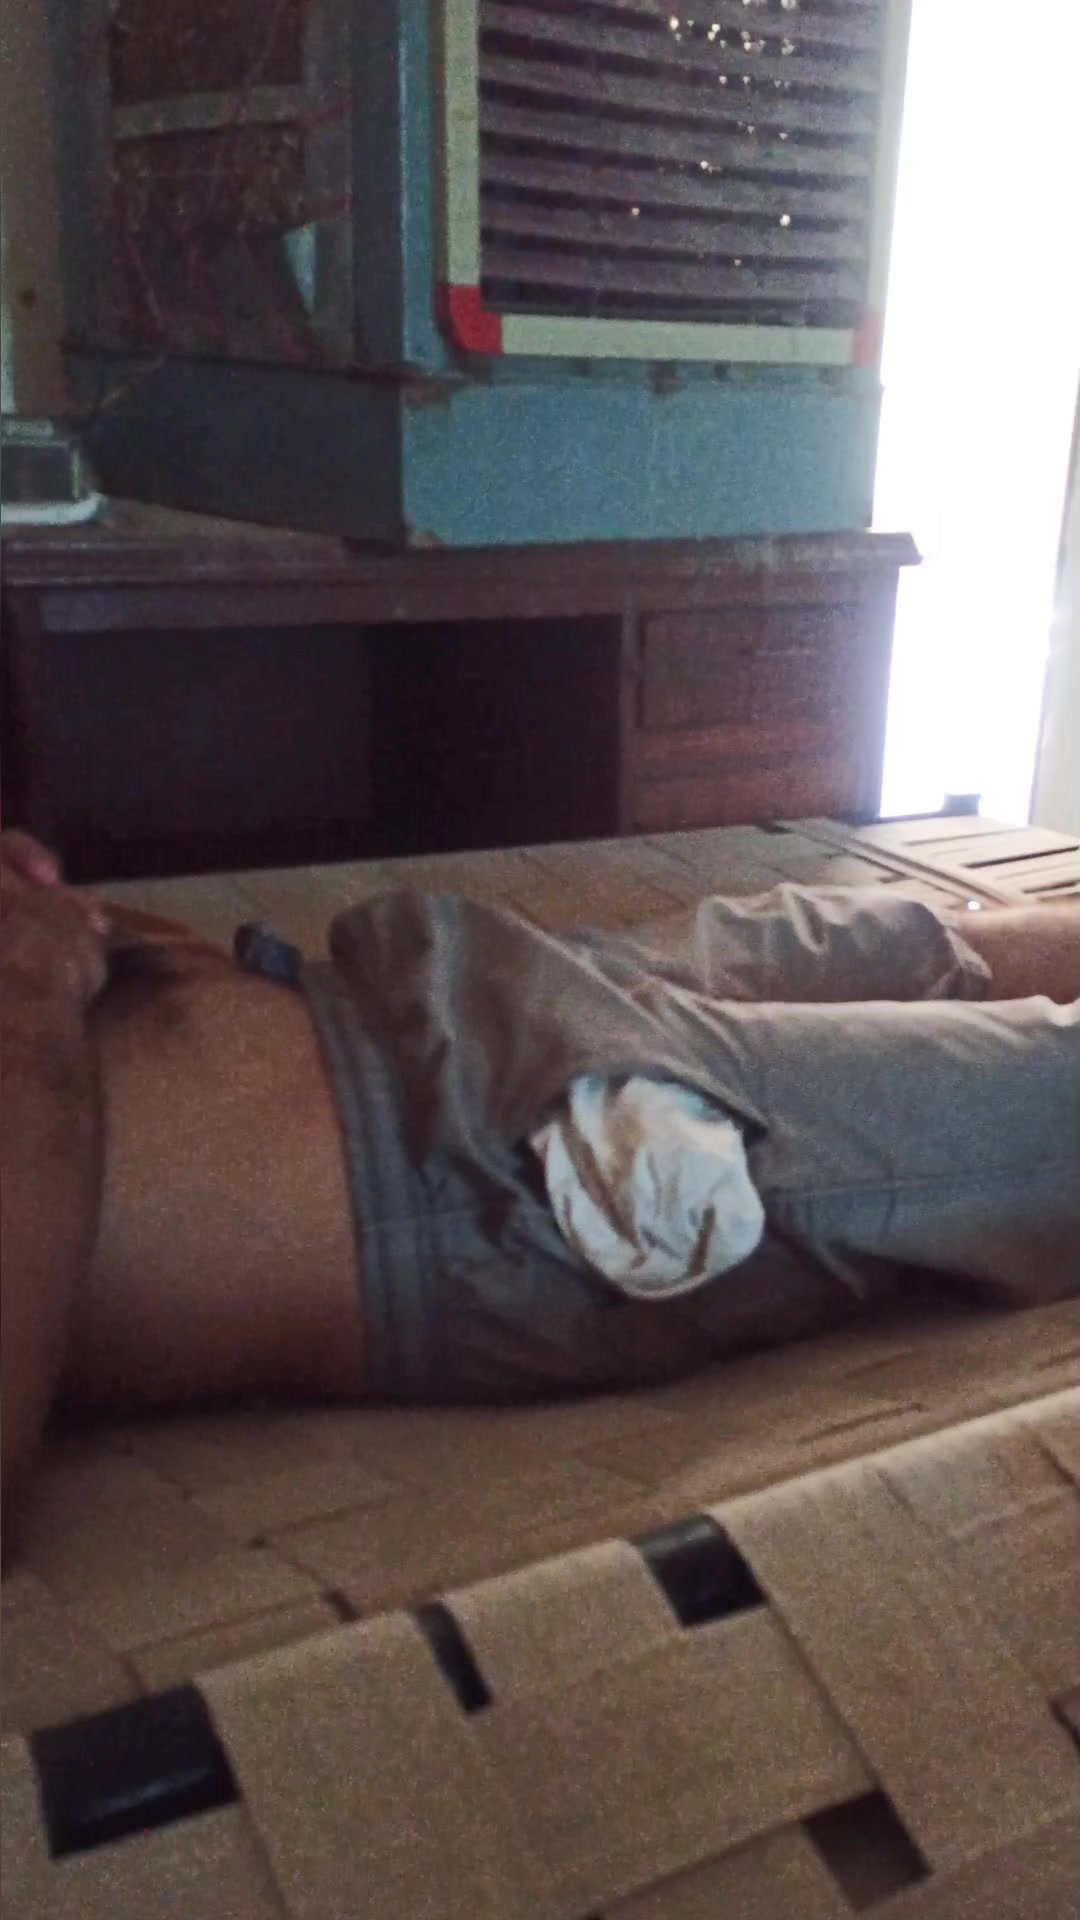 Hostel Spy: Faizan sleeping videos